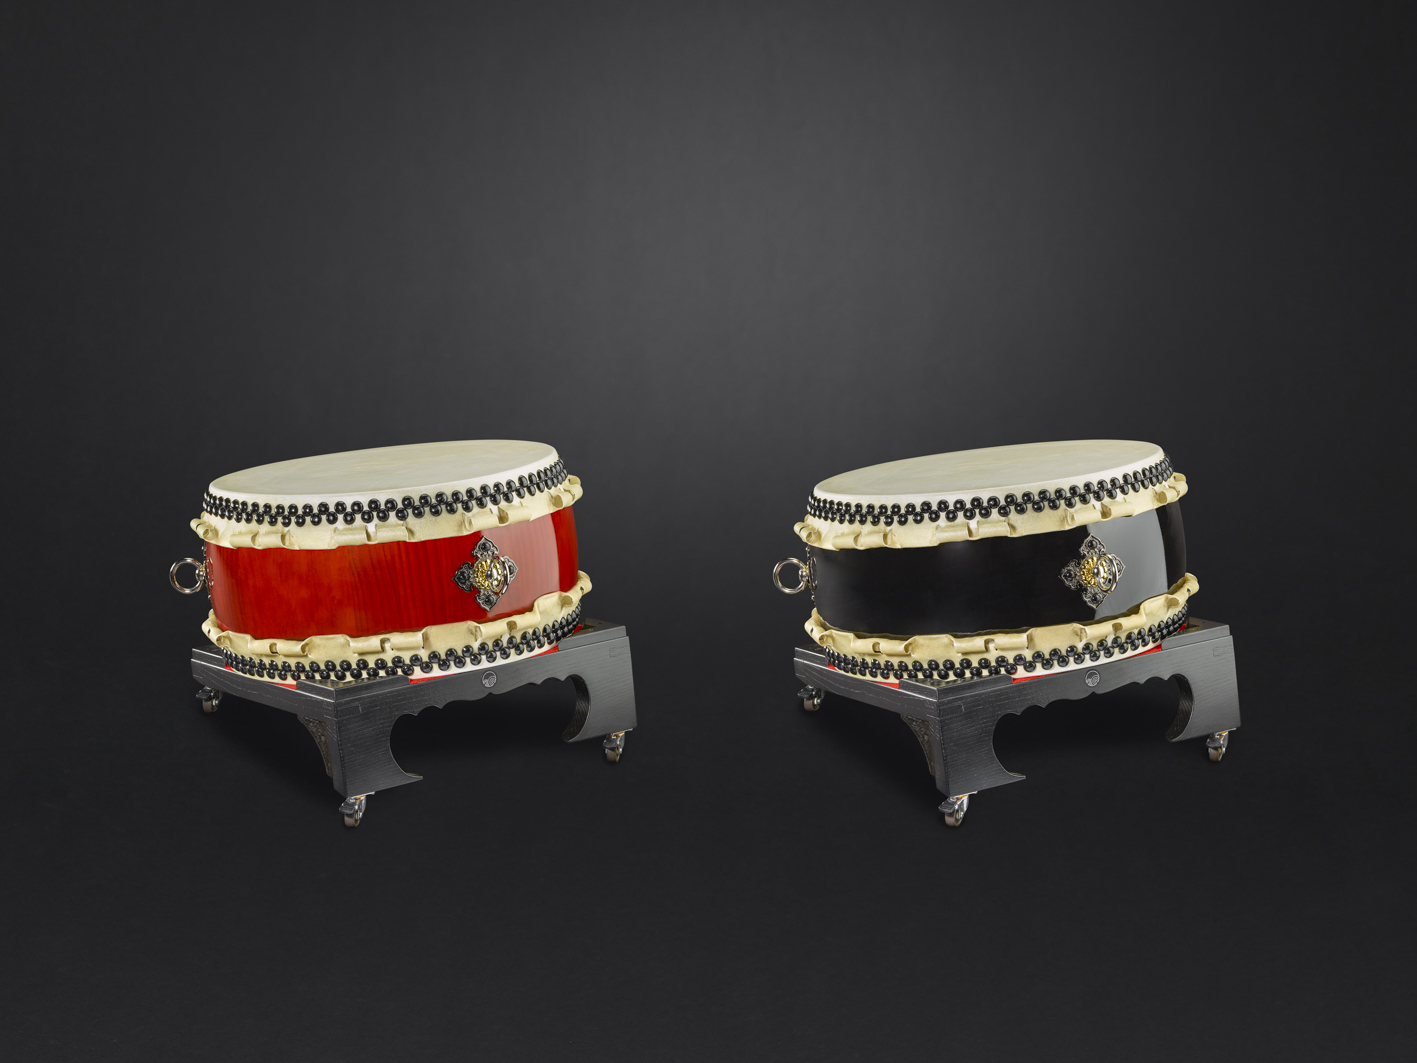 Hira-Daiko drums hq Ø48cm/h:25cm (shiny-black & red-brown) with flat-stand  (695€/150€)